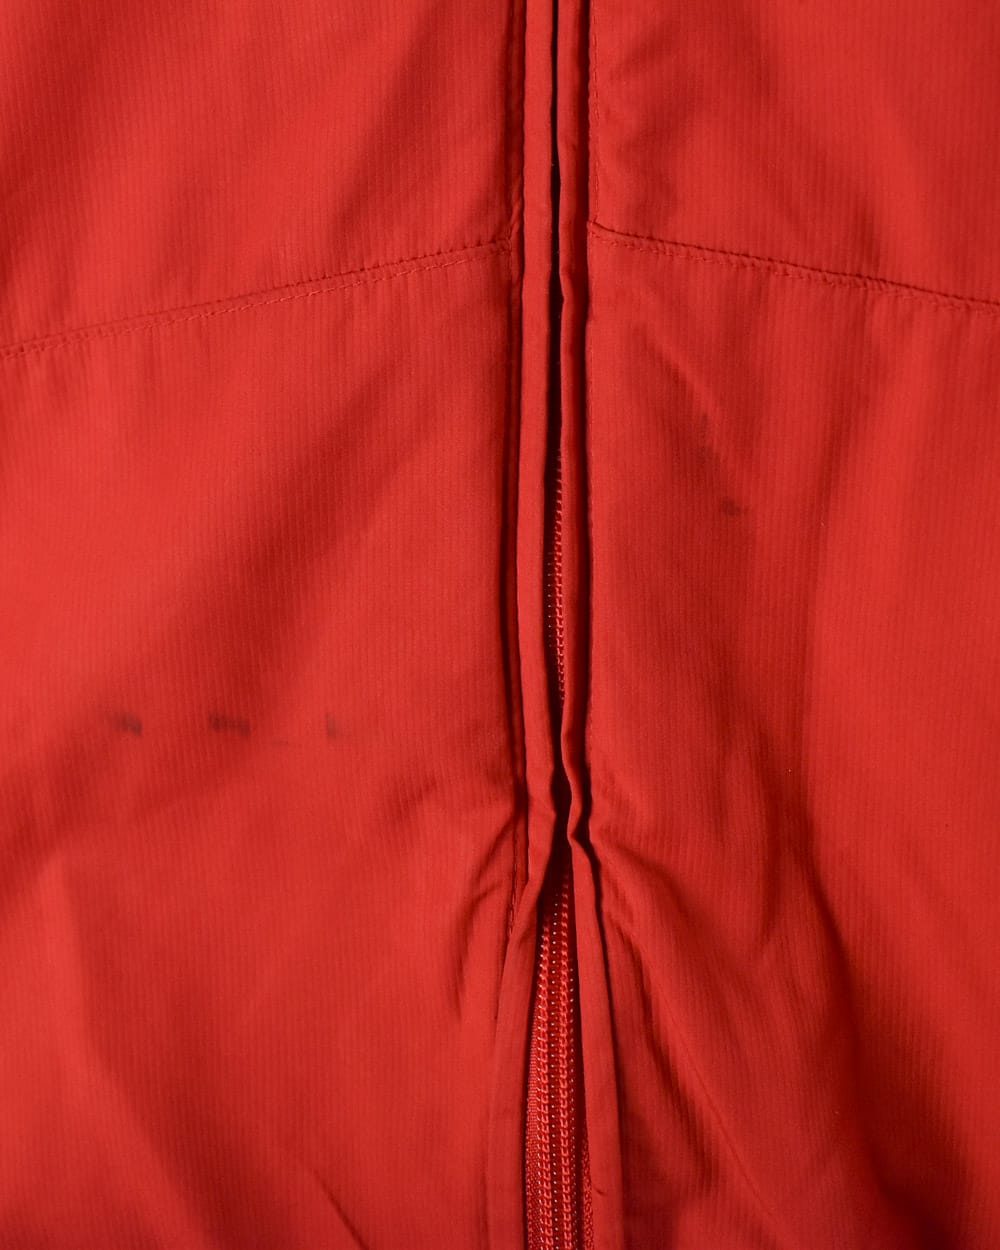 Red Nike Team George Wythe Track & Field Windbreaker Jacket - Large